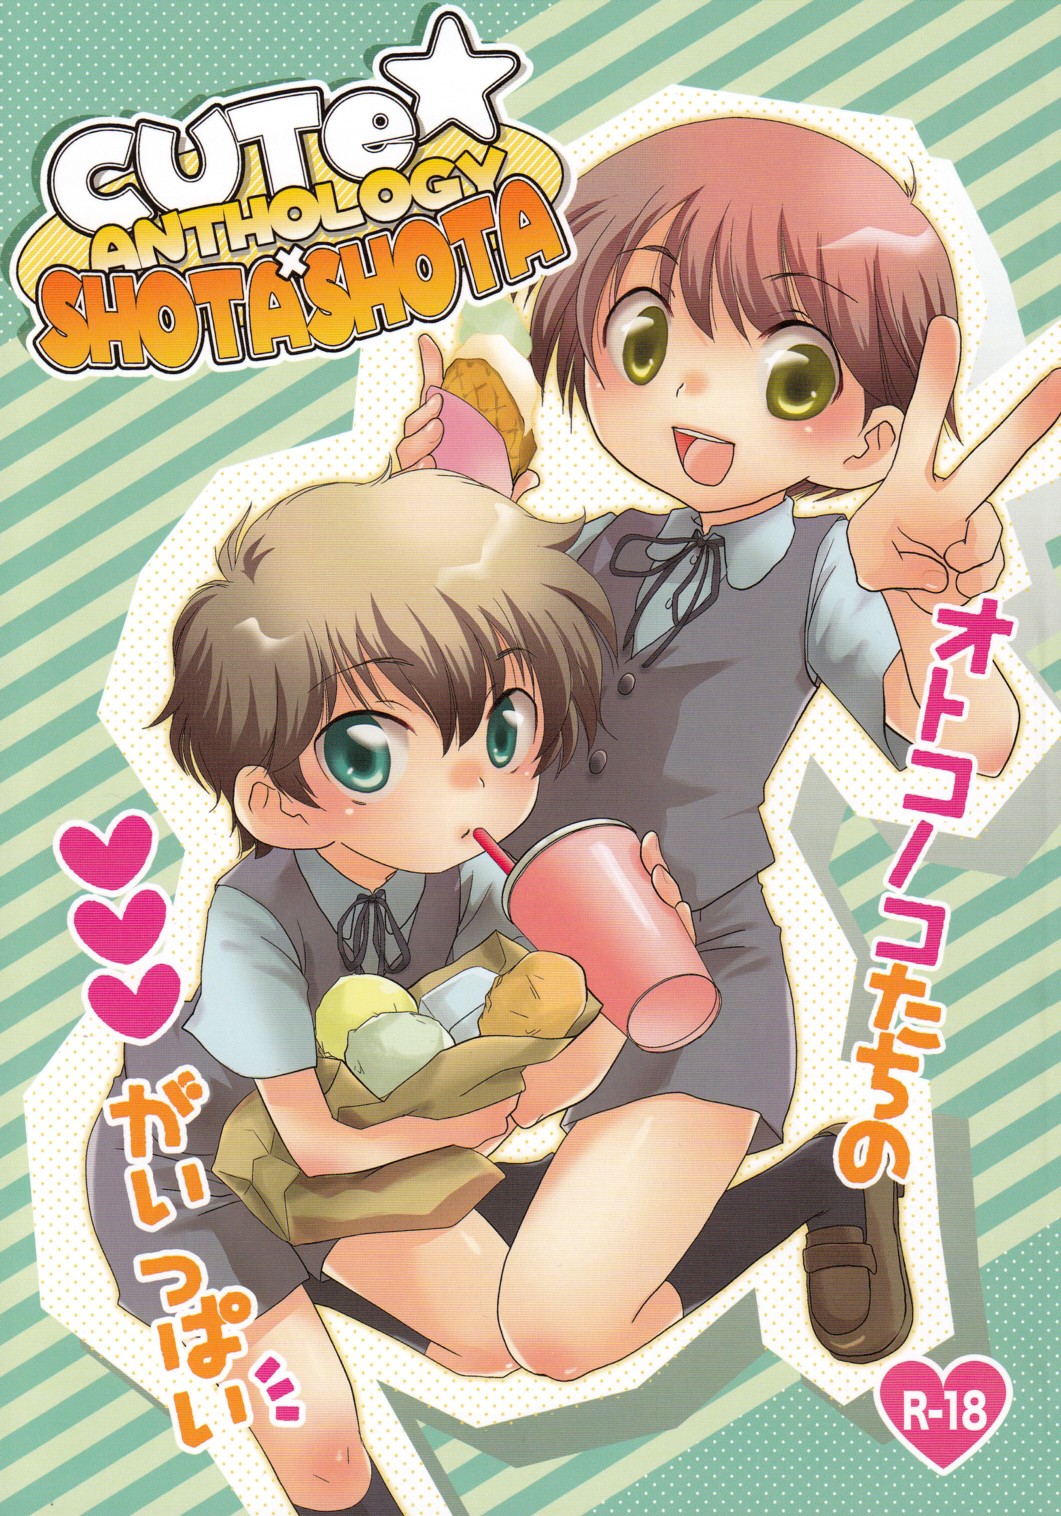 Xxx Anime Shota - Cute Anthology Shota x Shota - Page 1 - HentaiEra